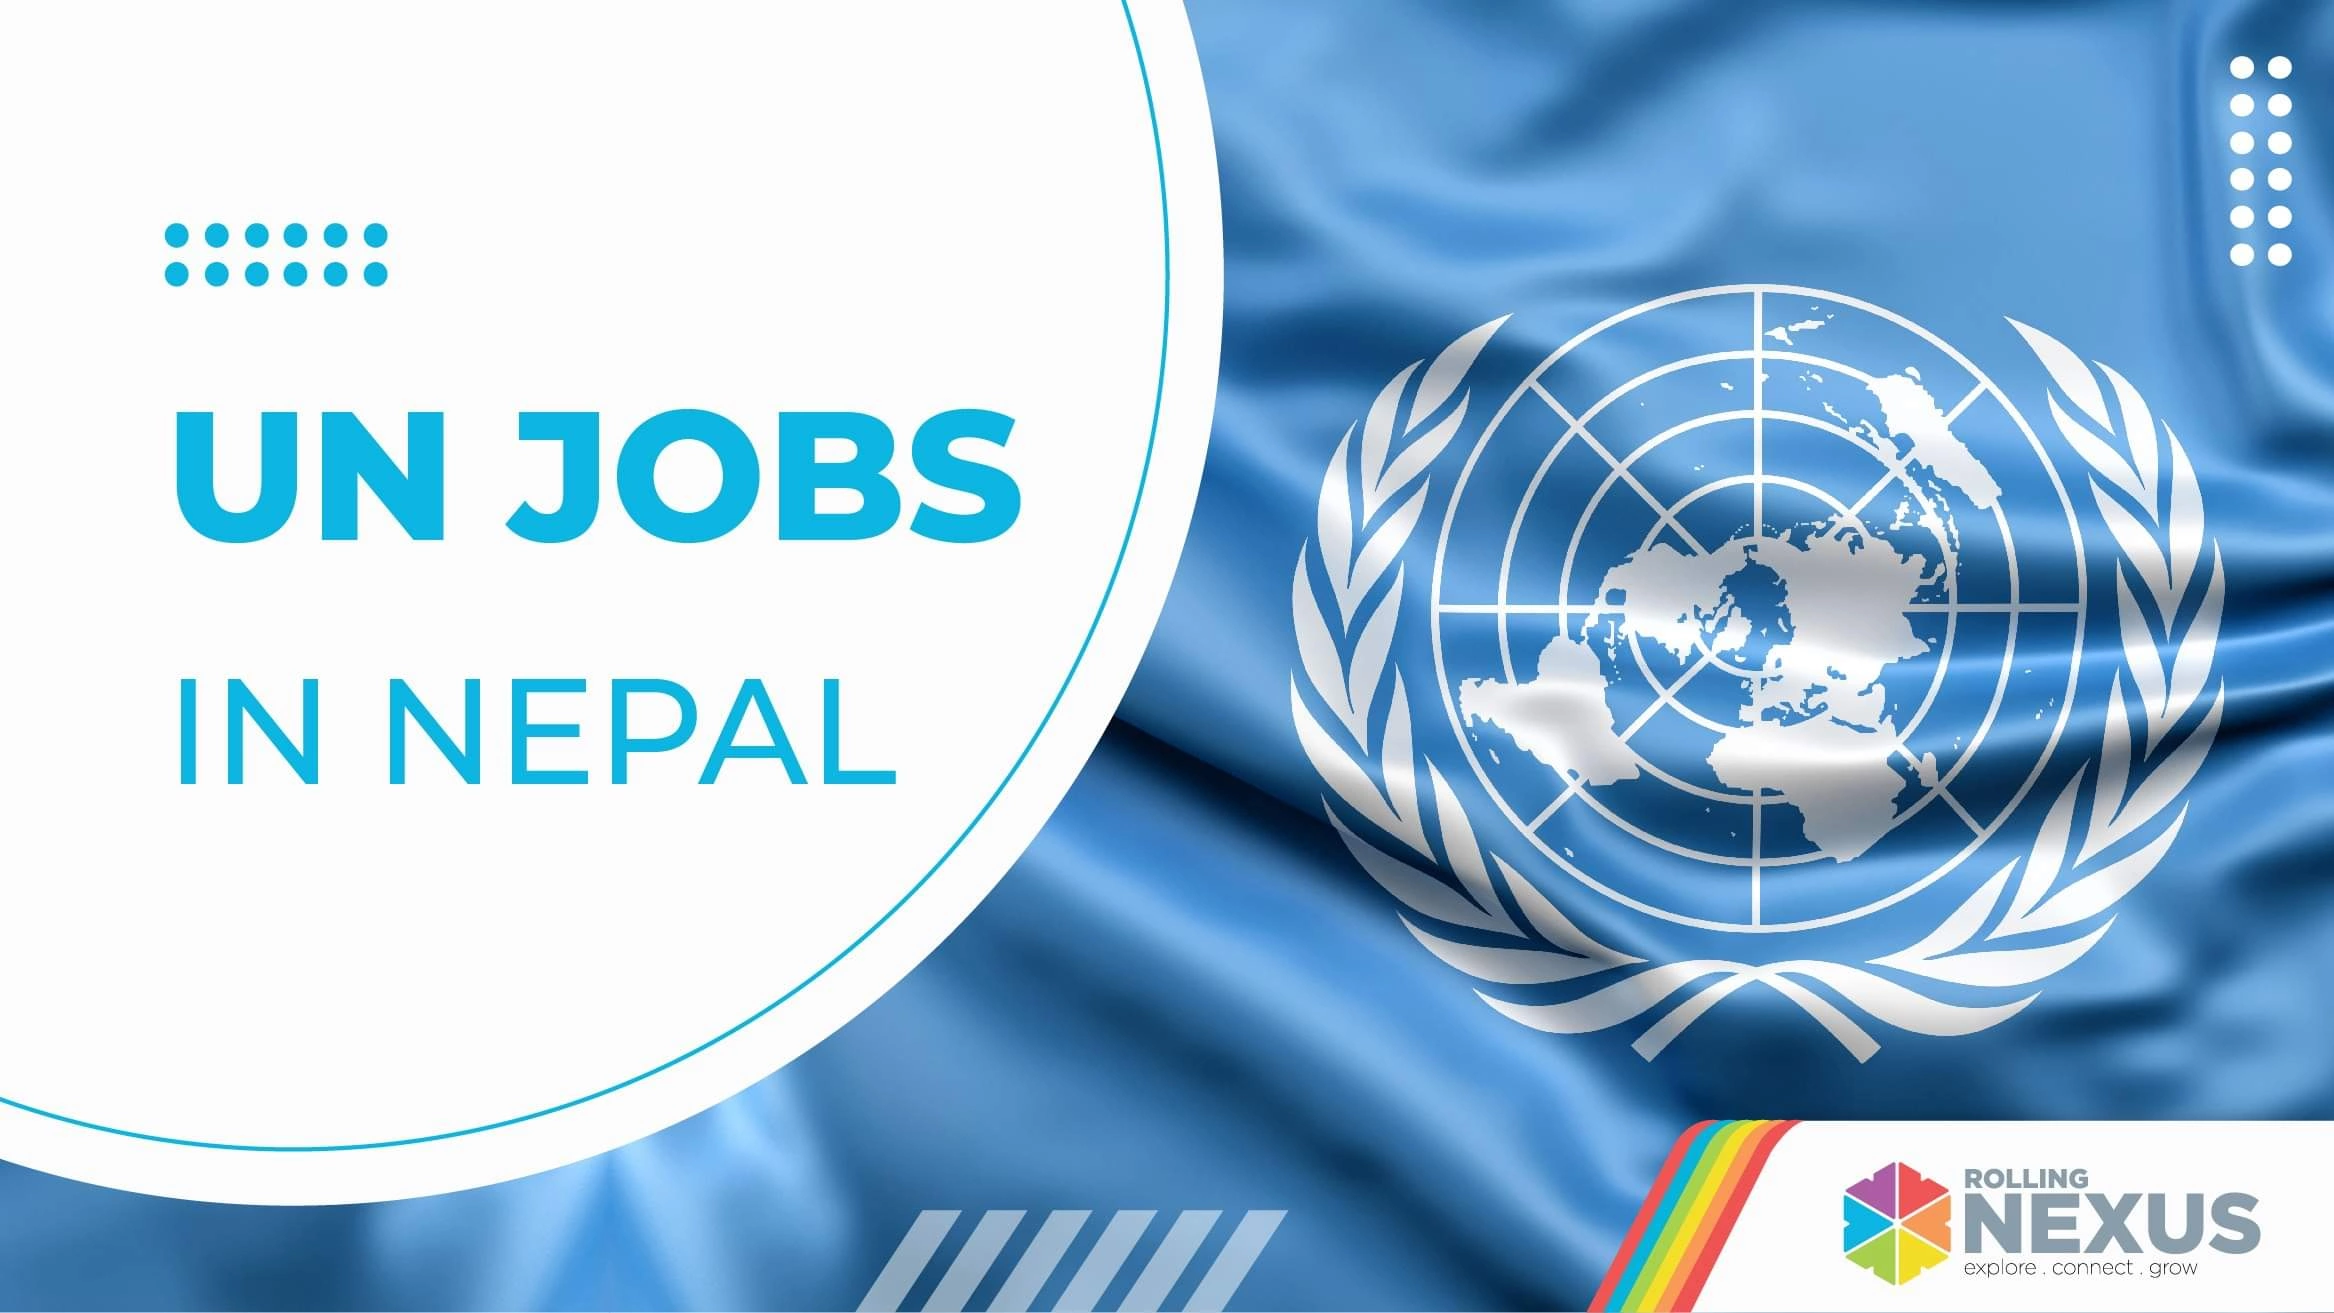 UN Jobs in Nepal